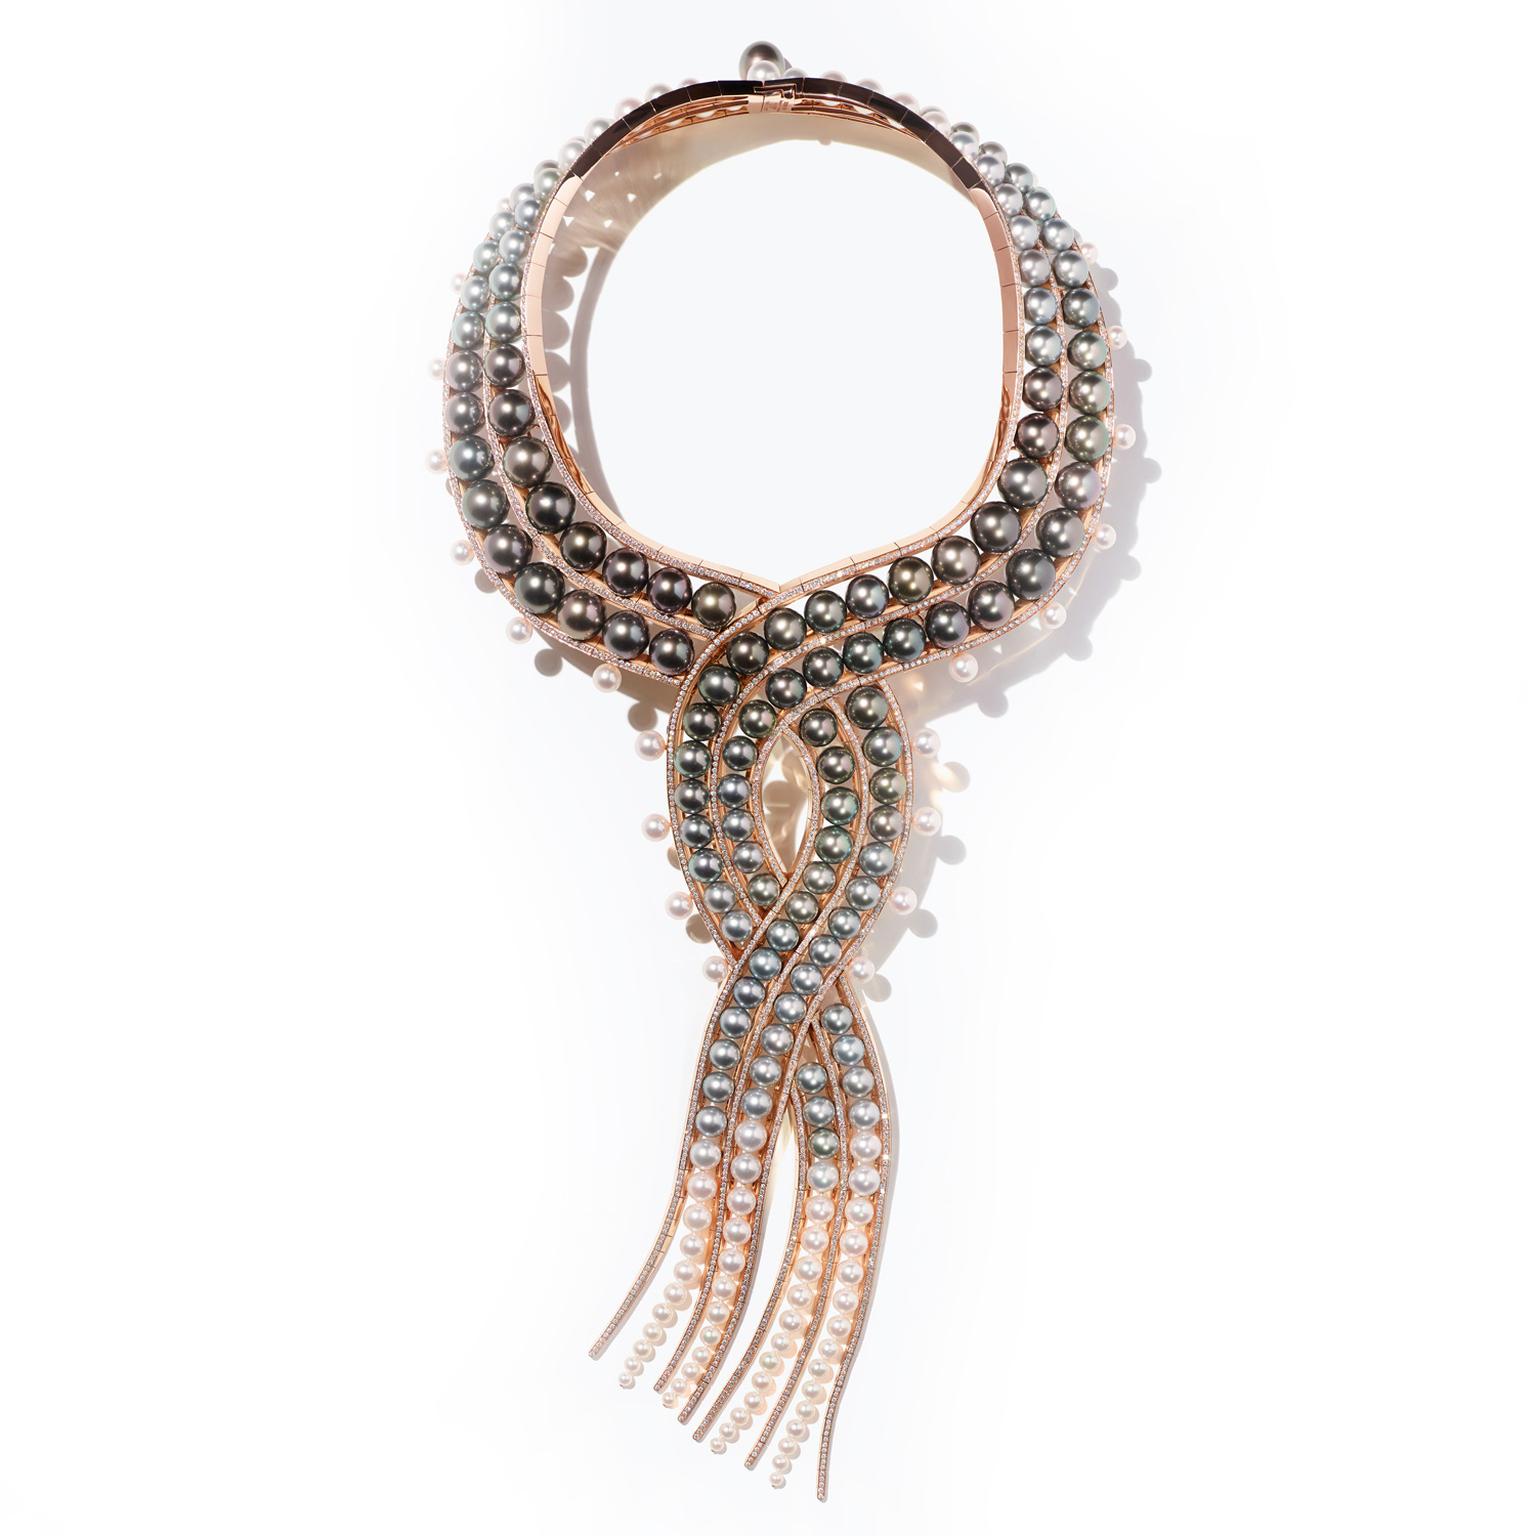 Hermès Ombres et Lumière pearl necklace frmo the HB-IV Continuum collection